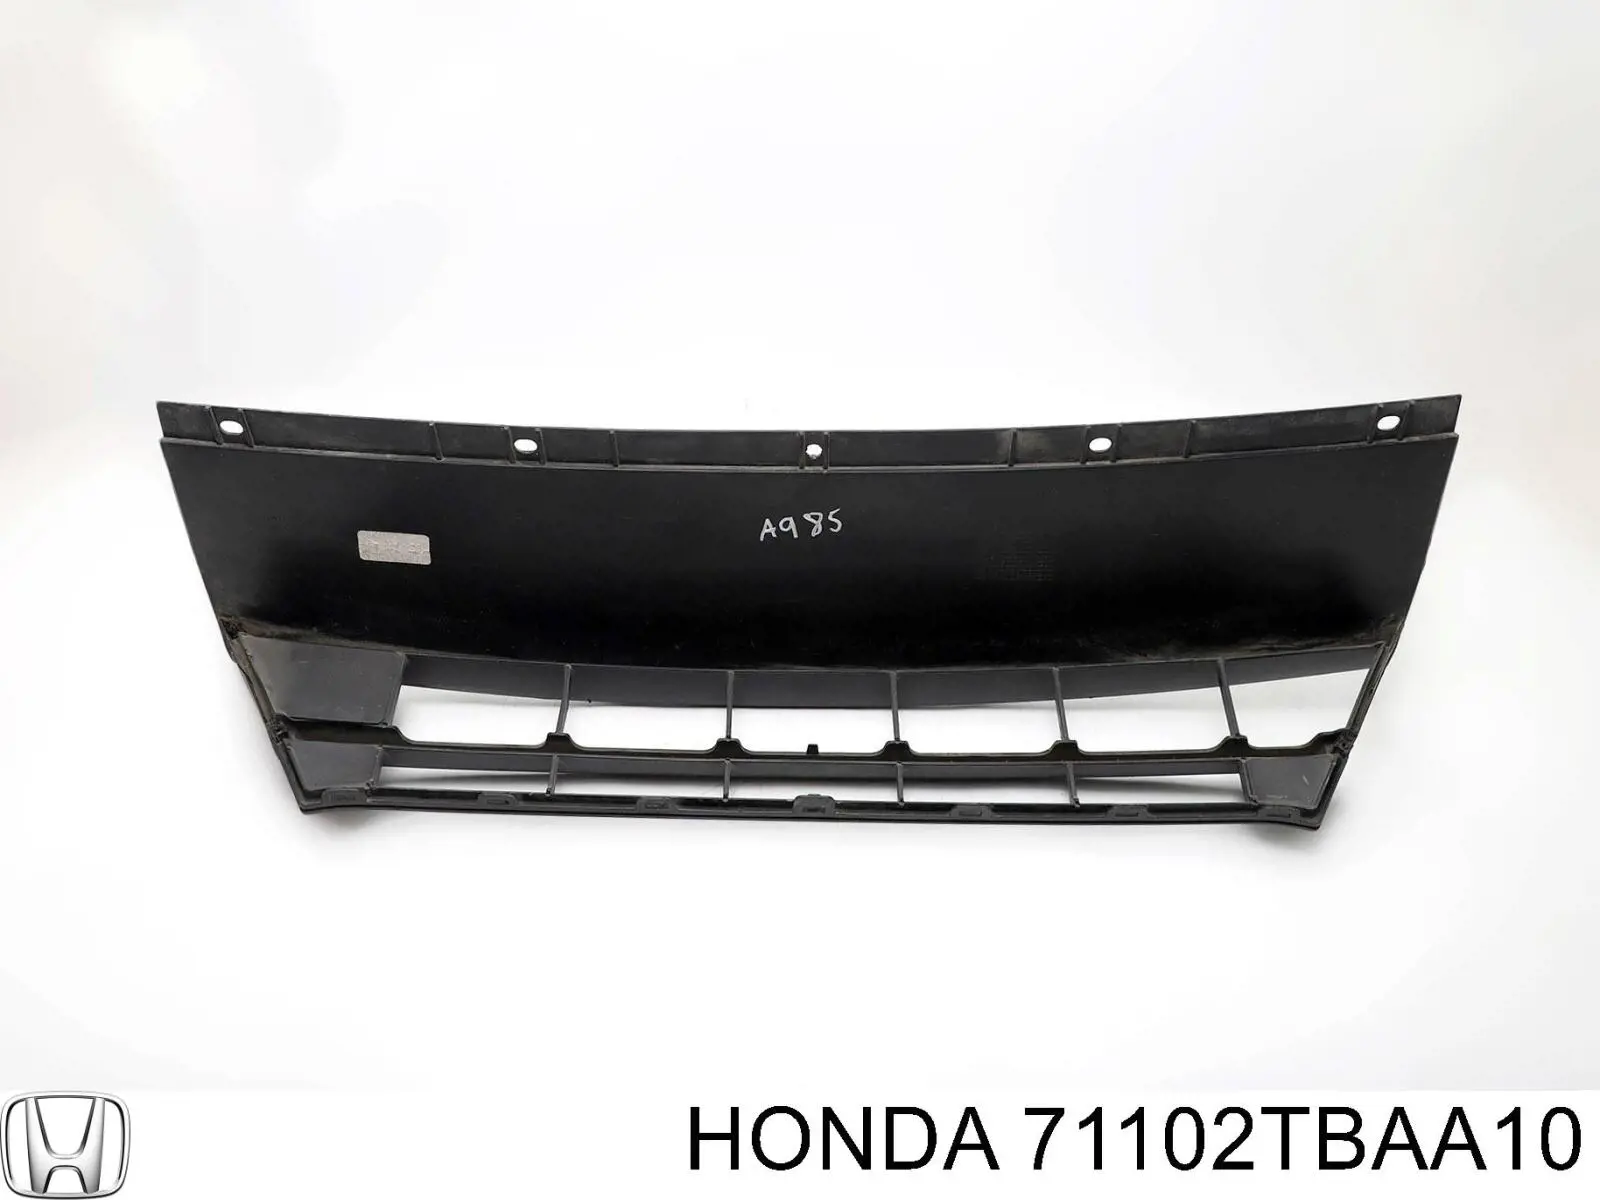 71102TBAA10 Honda rejilla de ventilación, parachoques trasero, central